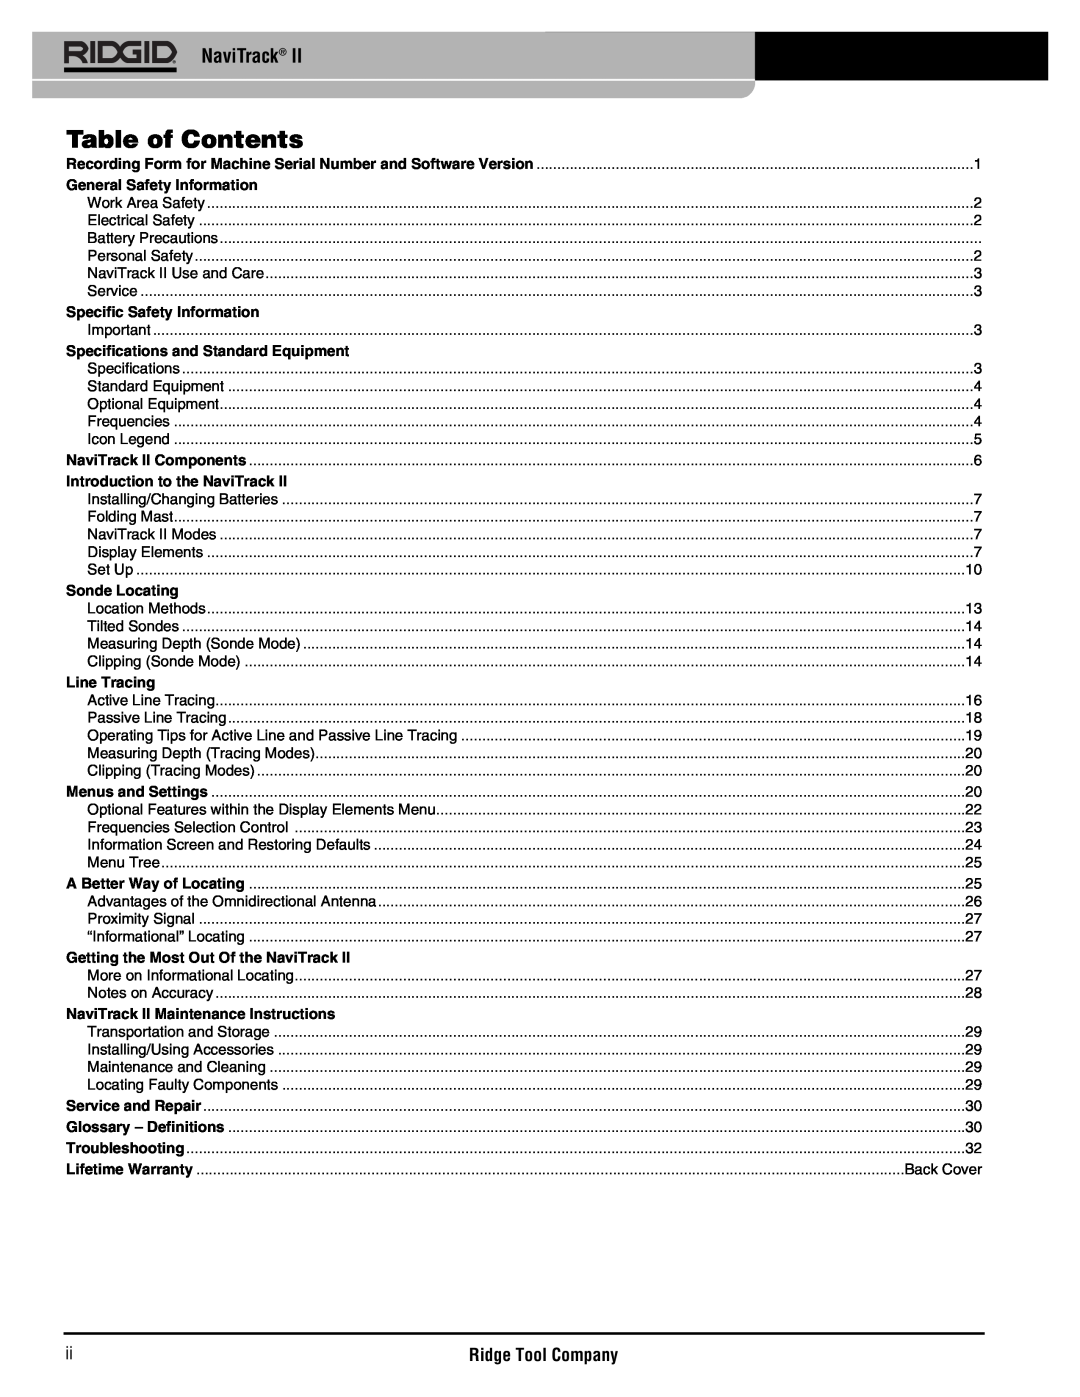 RIDGID Metal Detector manual Table of Contents, NaviTrack, Battery Precautions, Back Cover 